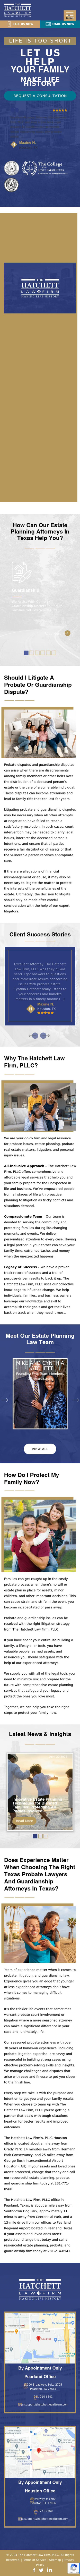 The Hatchett Law Firm - Houston TX Lawyers